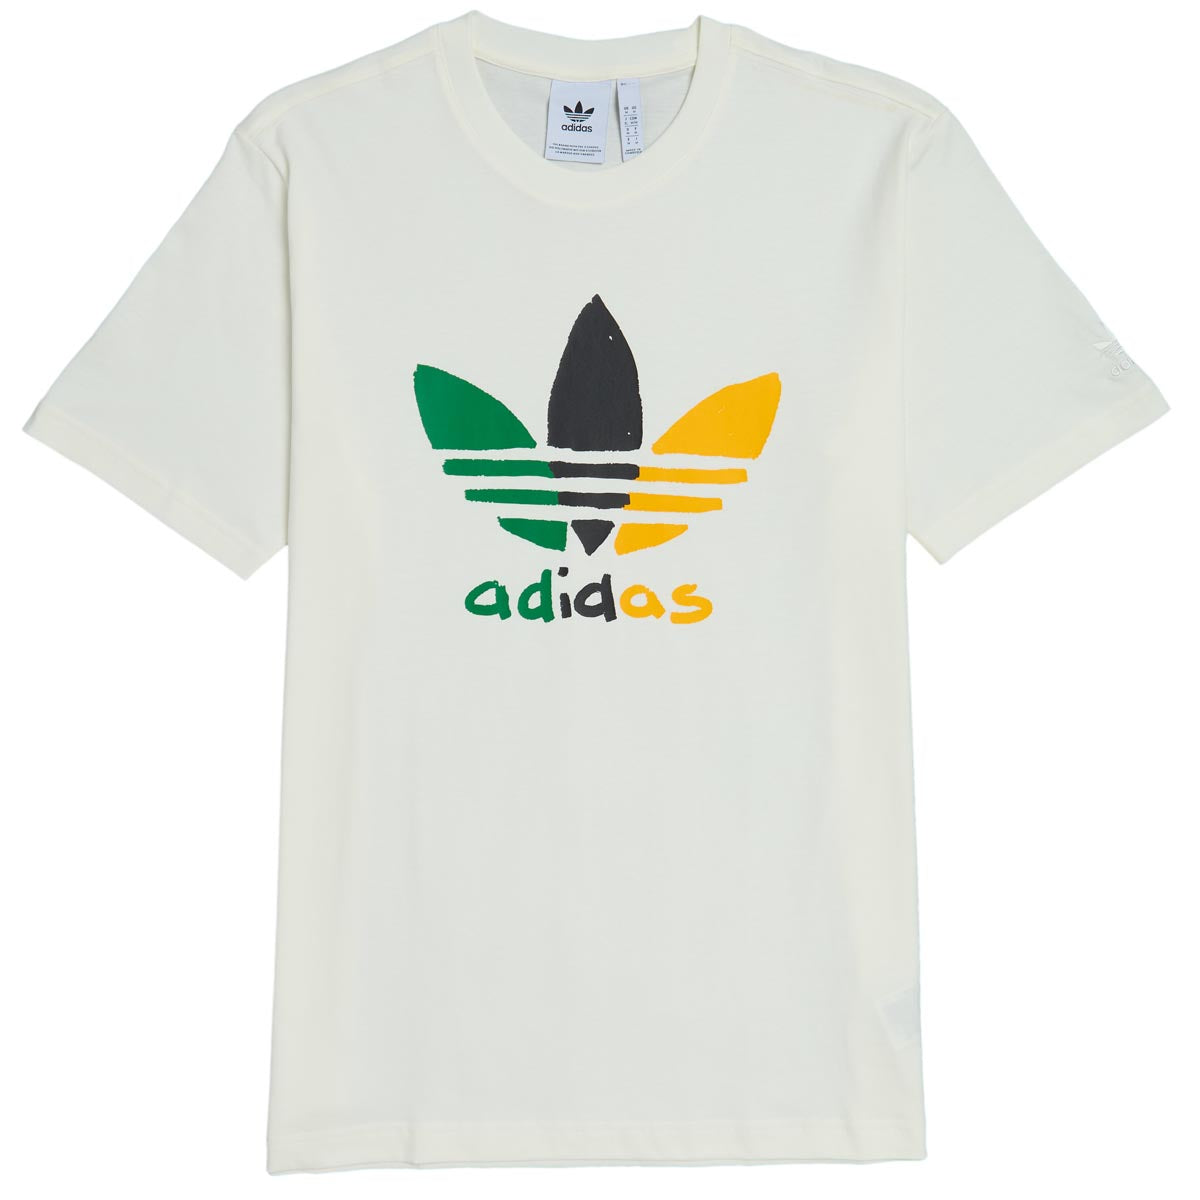 Adidas Sport T-Shirt - Off White image 1